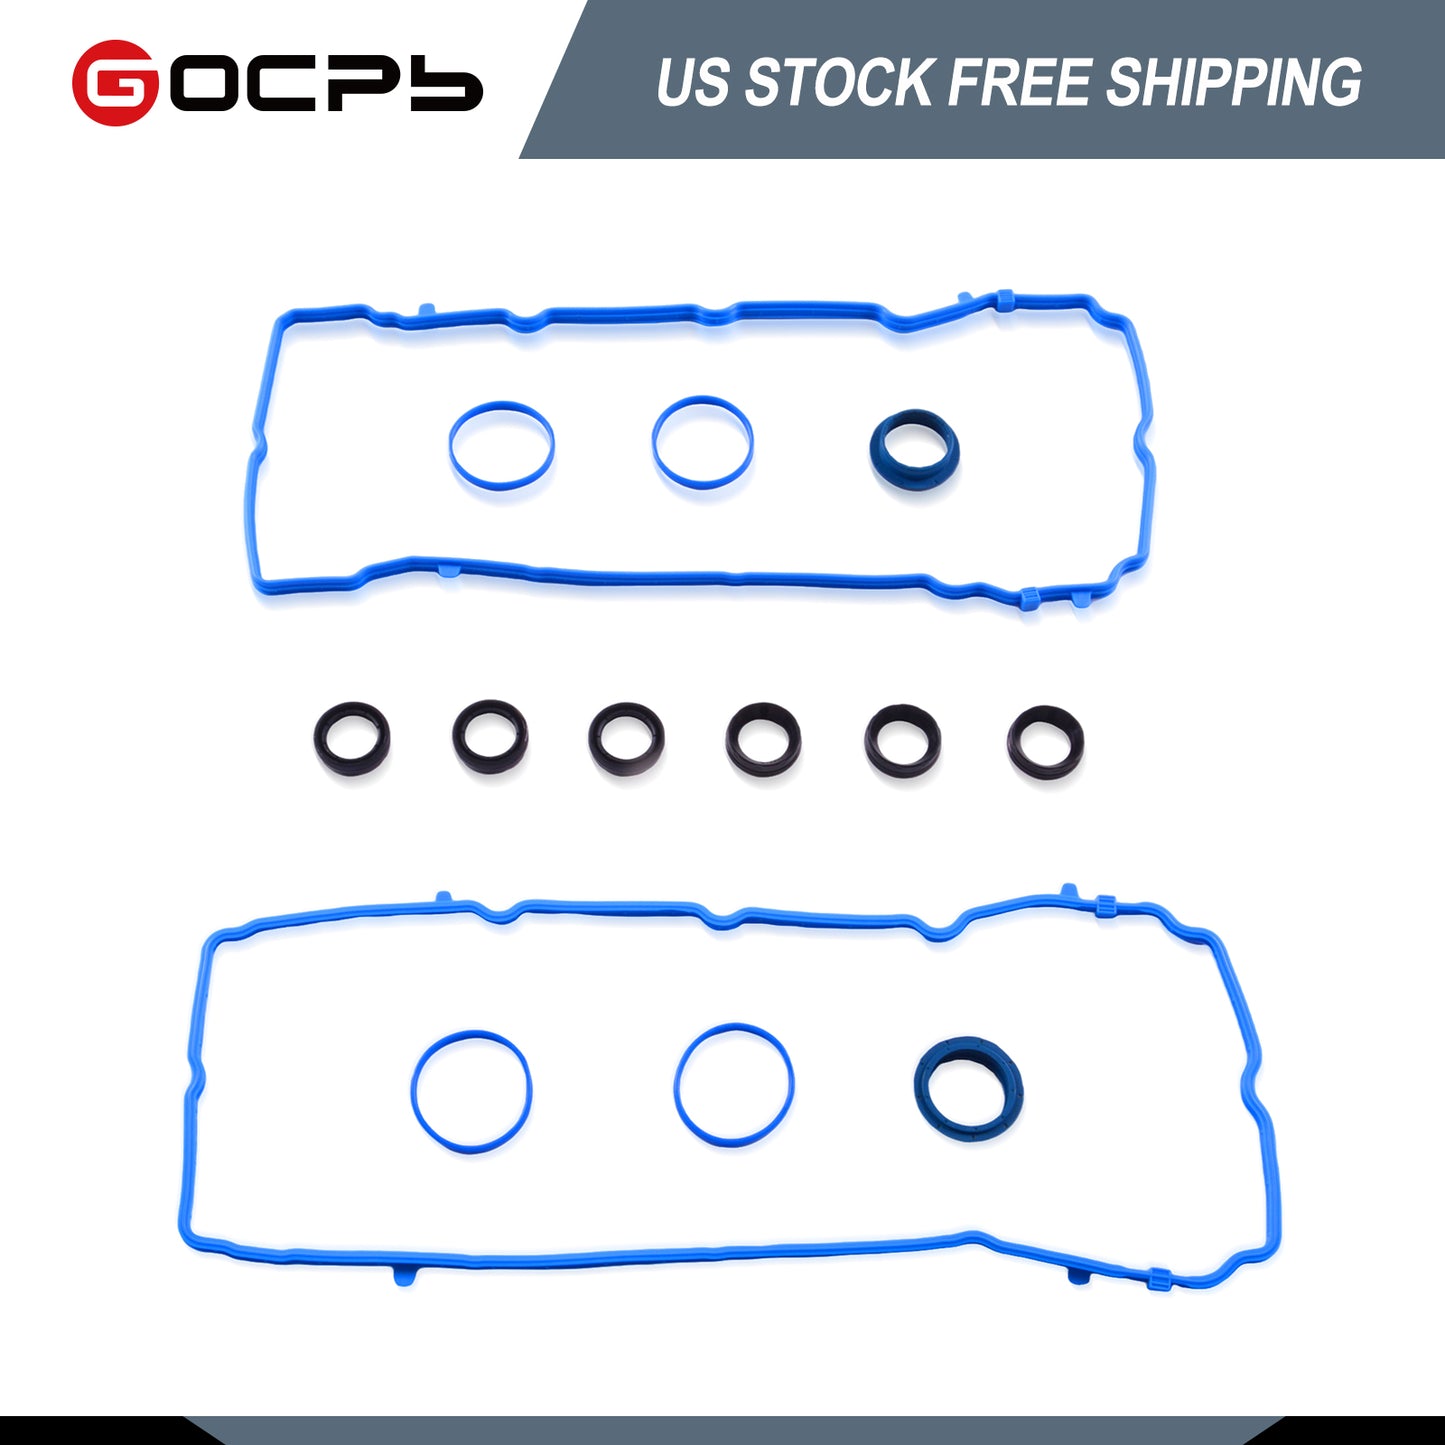 GOCPB Valve Cover Gasket Set Compatible with 3.6L V6 Dodge Journey, Durango, Avenger, Jeep Cherokee, Wrangler, Ram 1500, ProMaster, Chrysler 200, 300 - Replace VS50805R